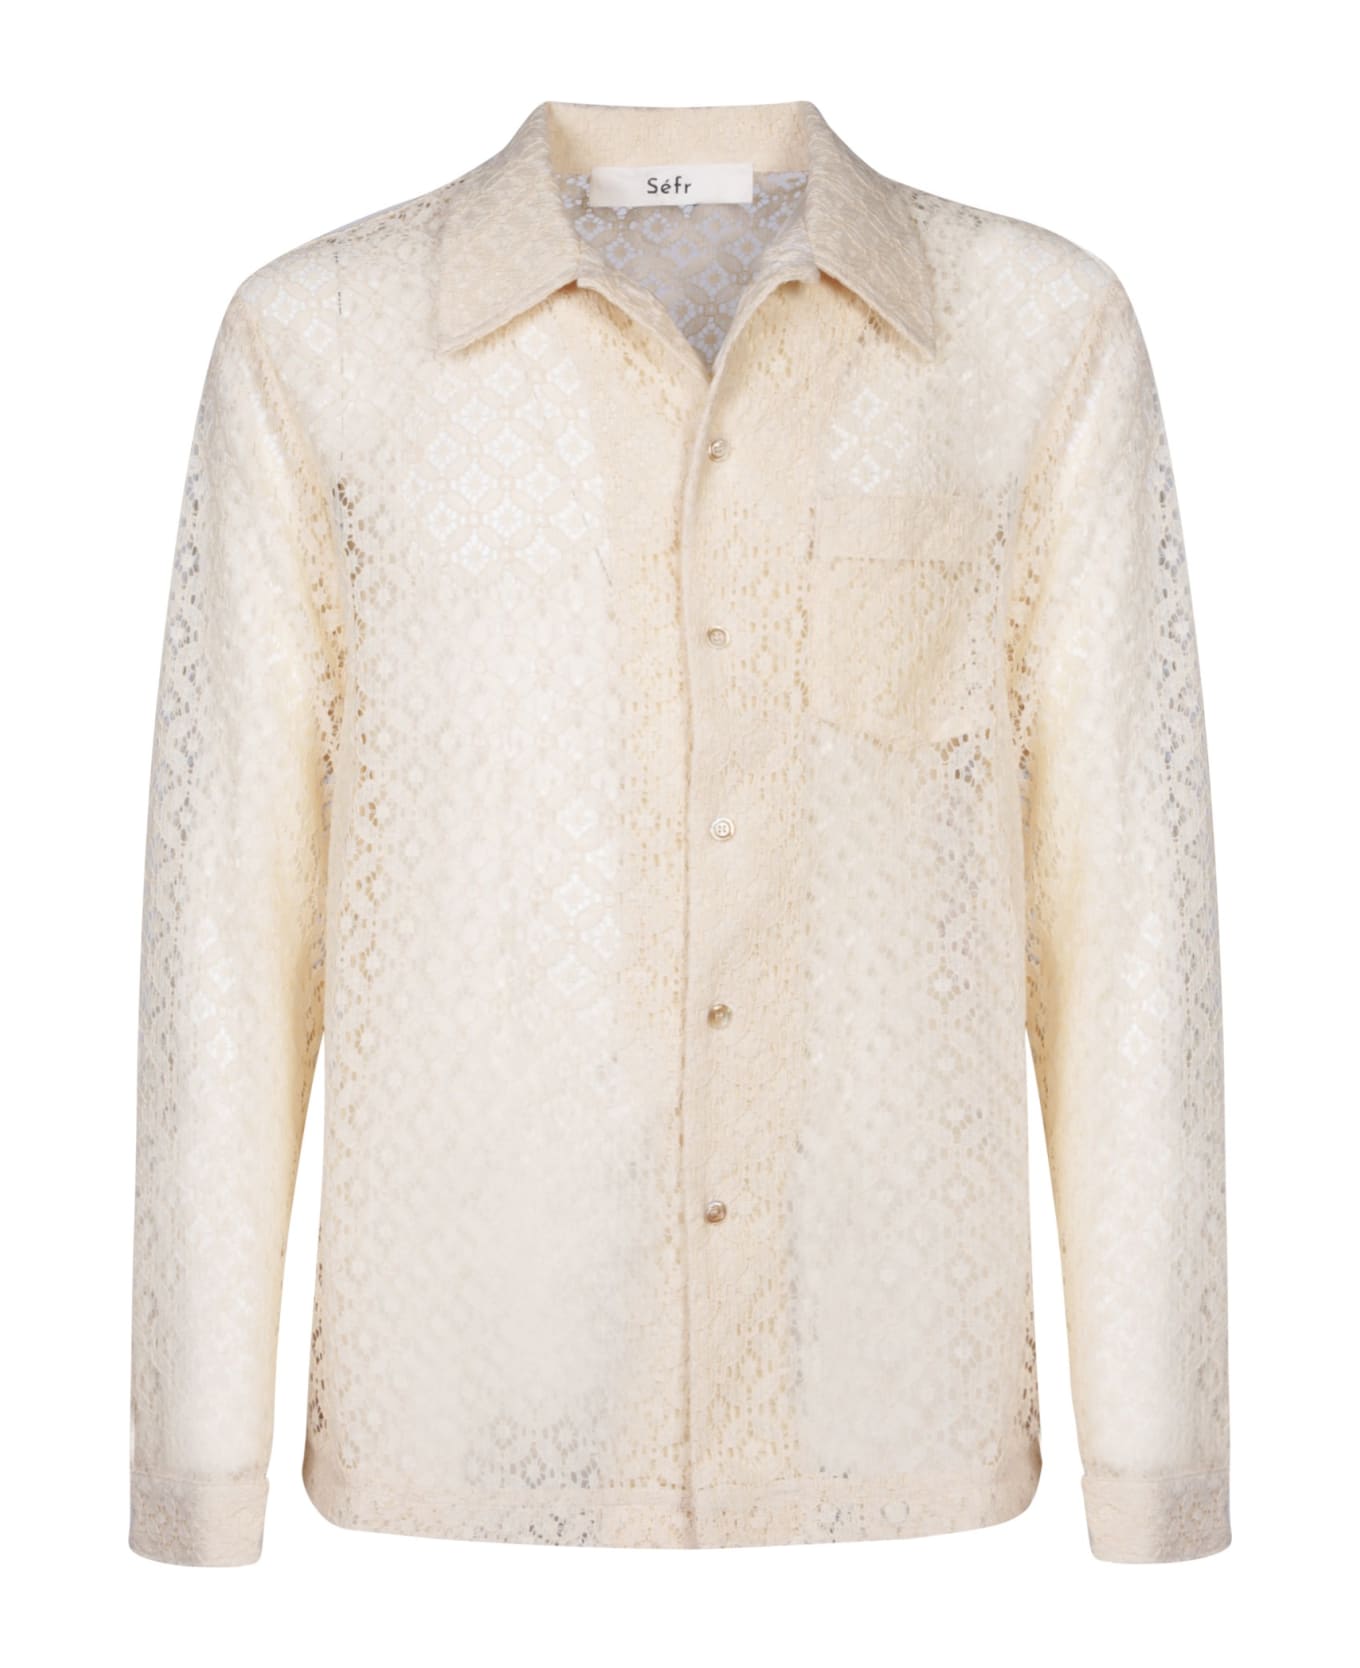 Séfr Jagou Embroidered Ivory Shirt - White